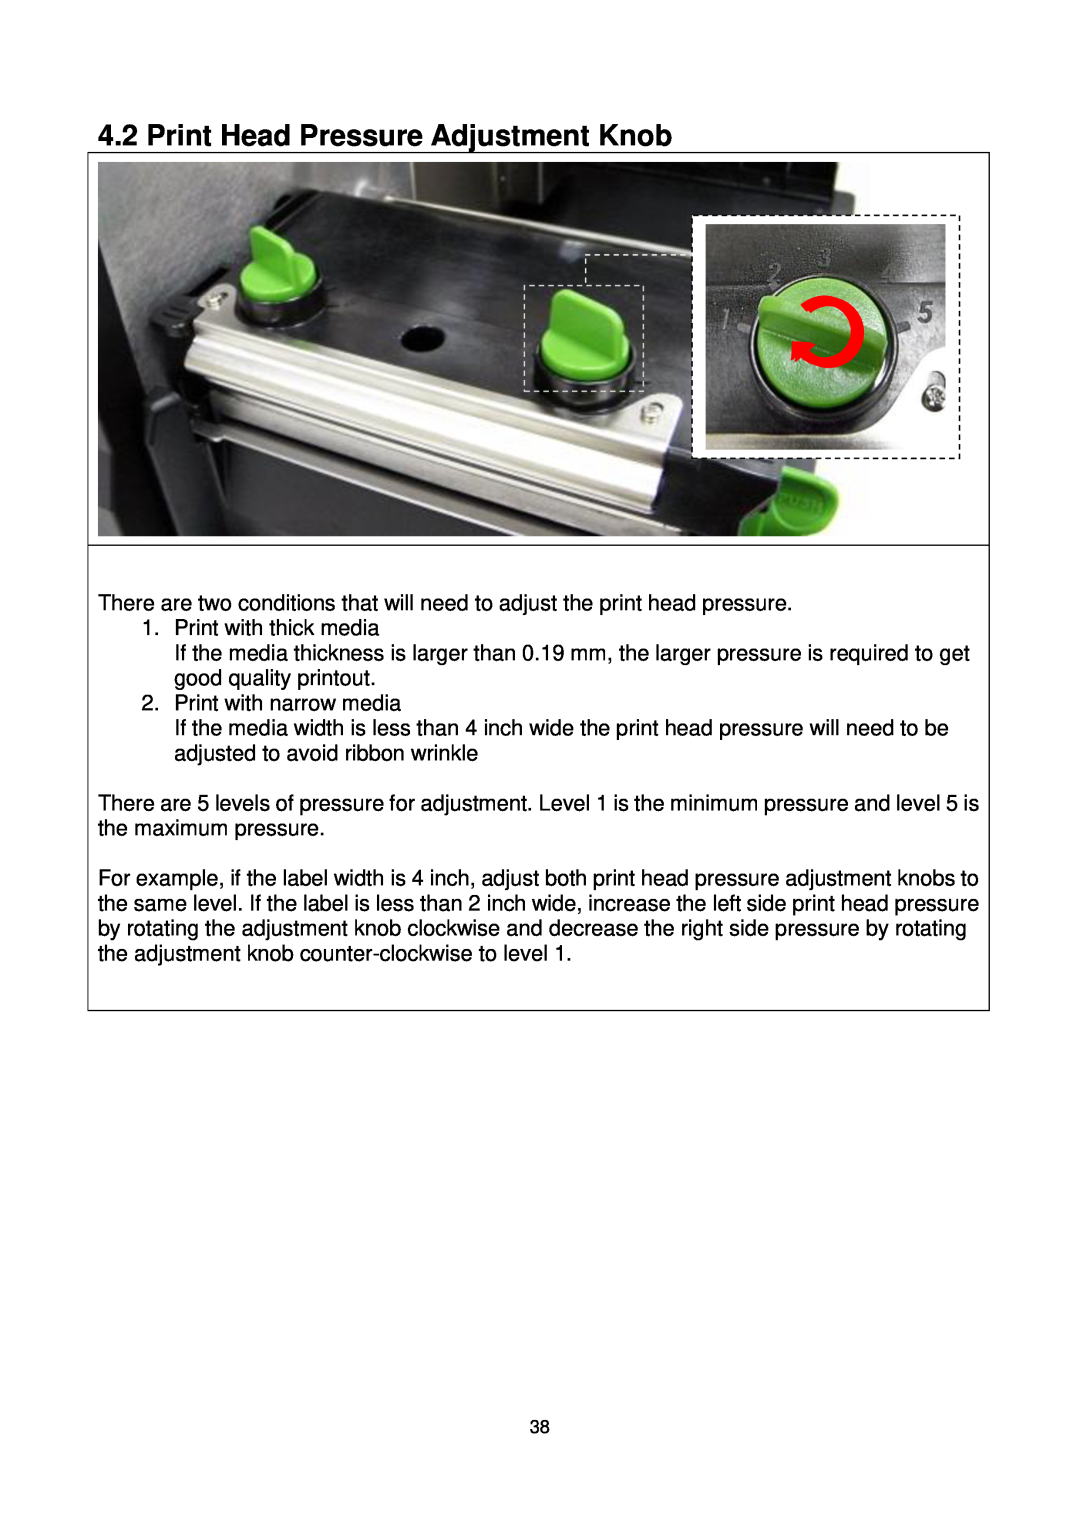 The Speaker Company me240 manual Print Head Pressure Adjustment Knob 